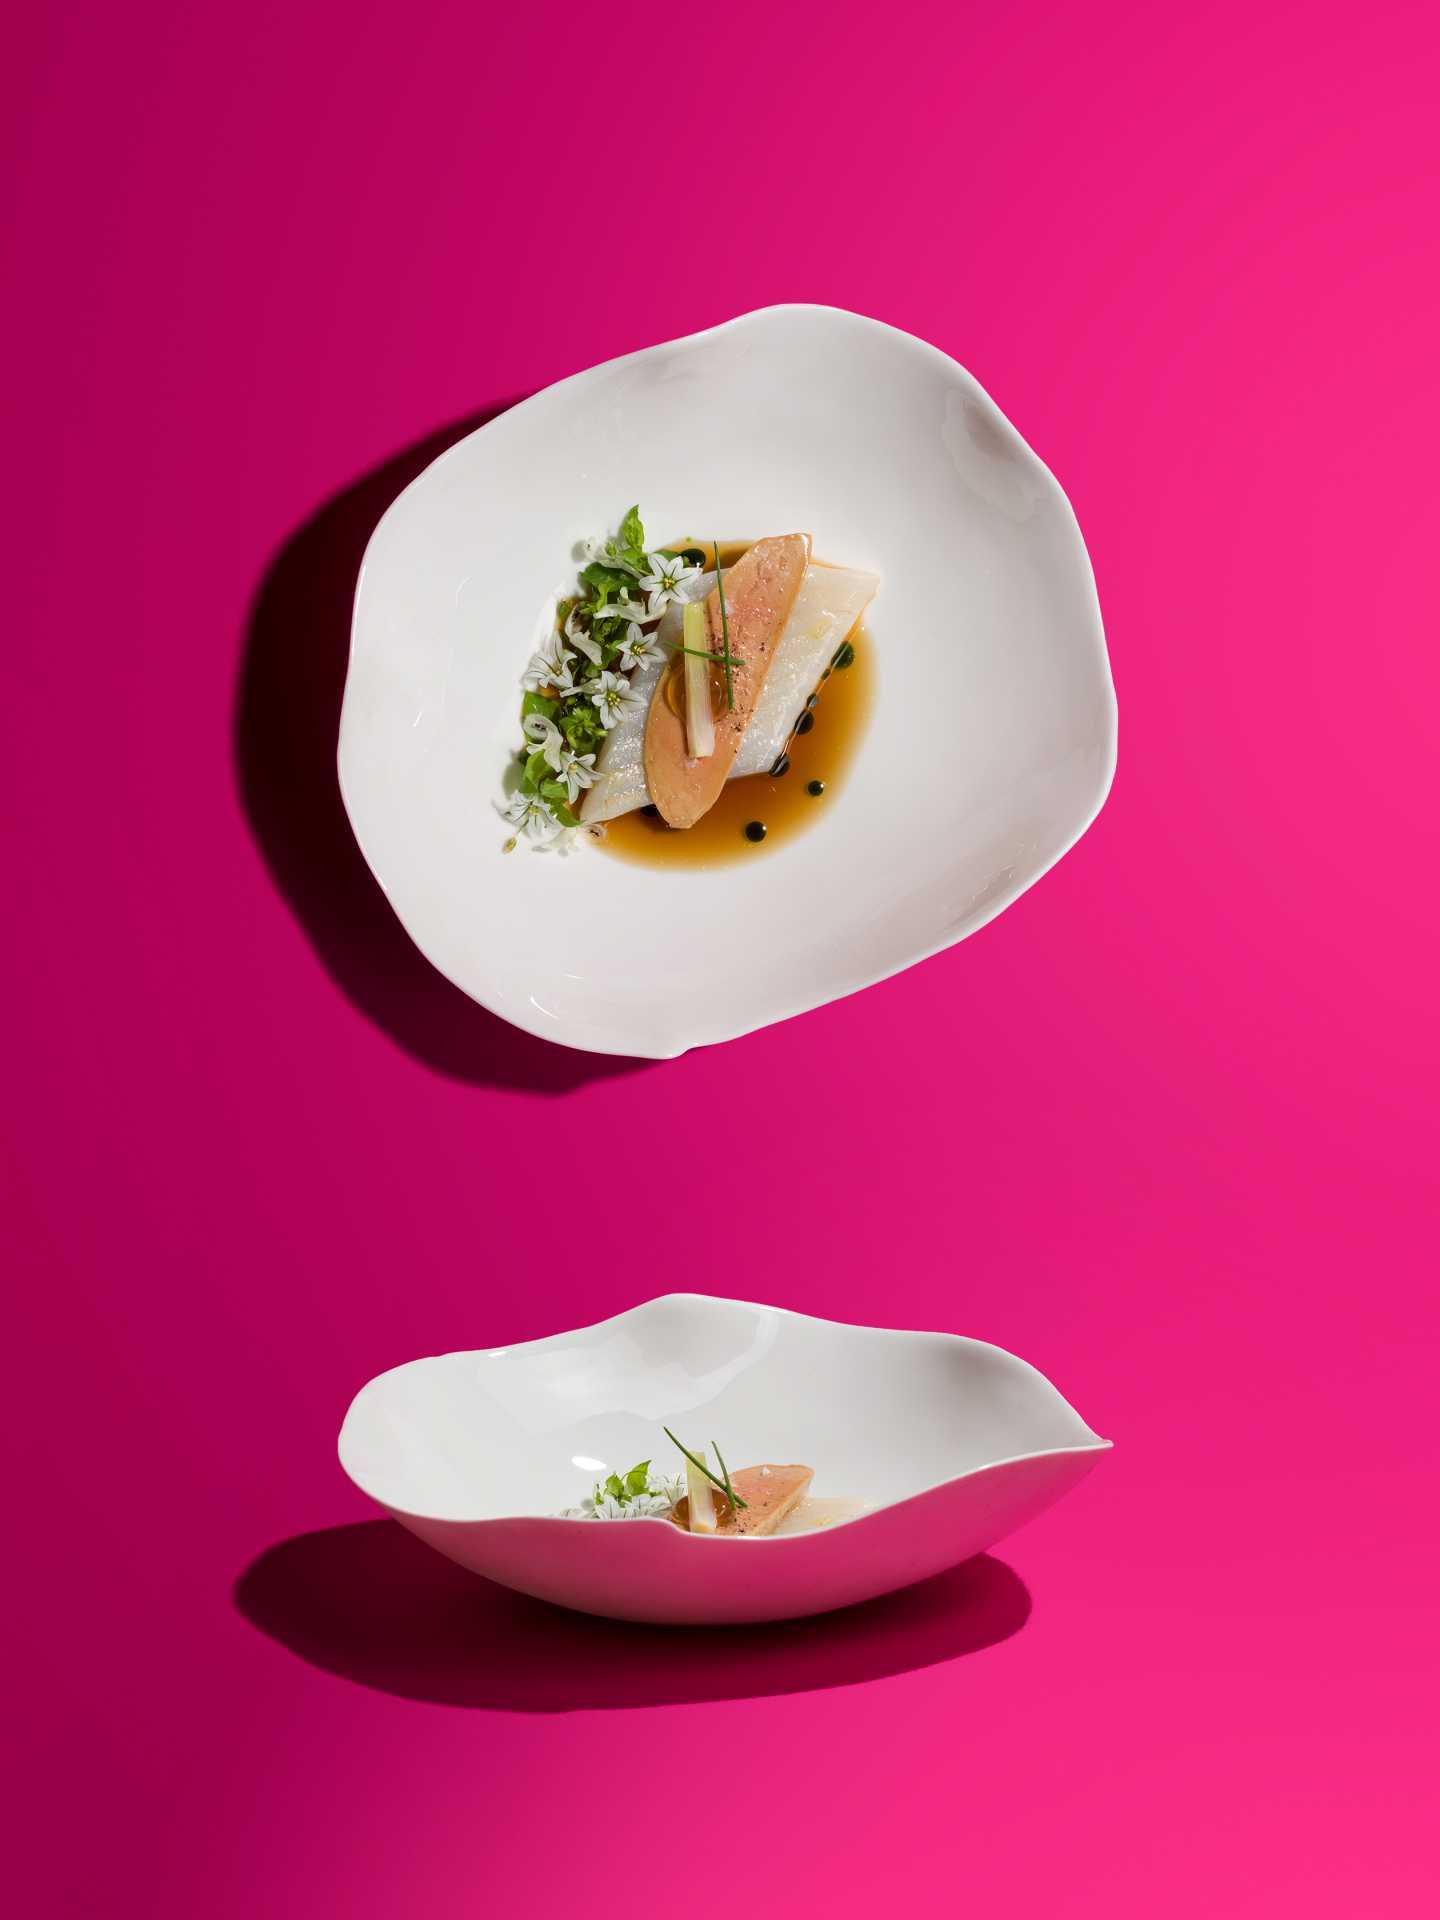 James Knappett, Kitchen Table, Turbot foie gras, onion